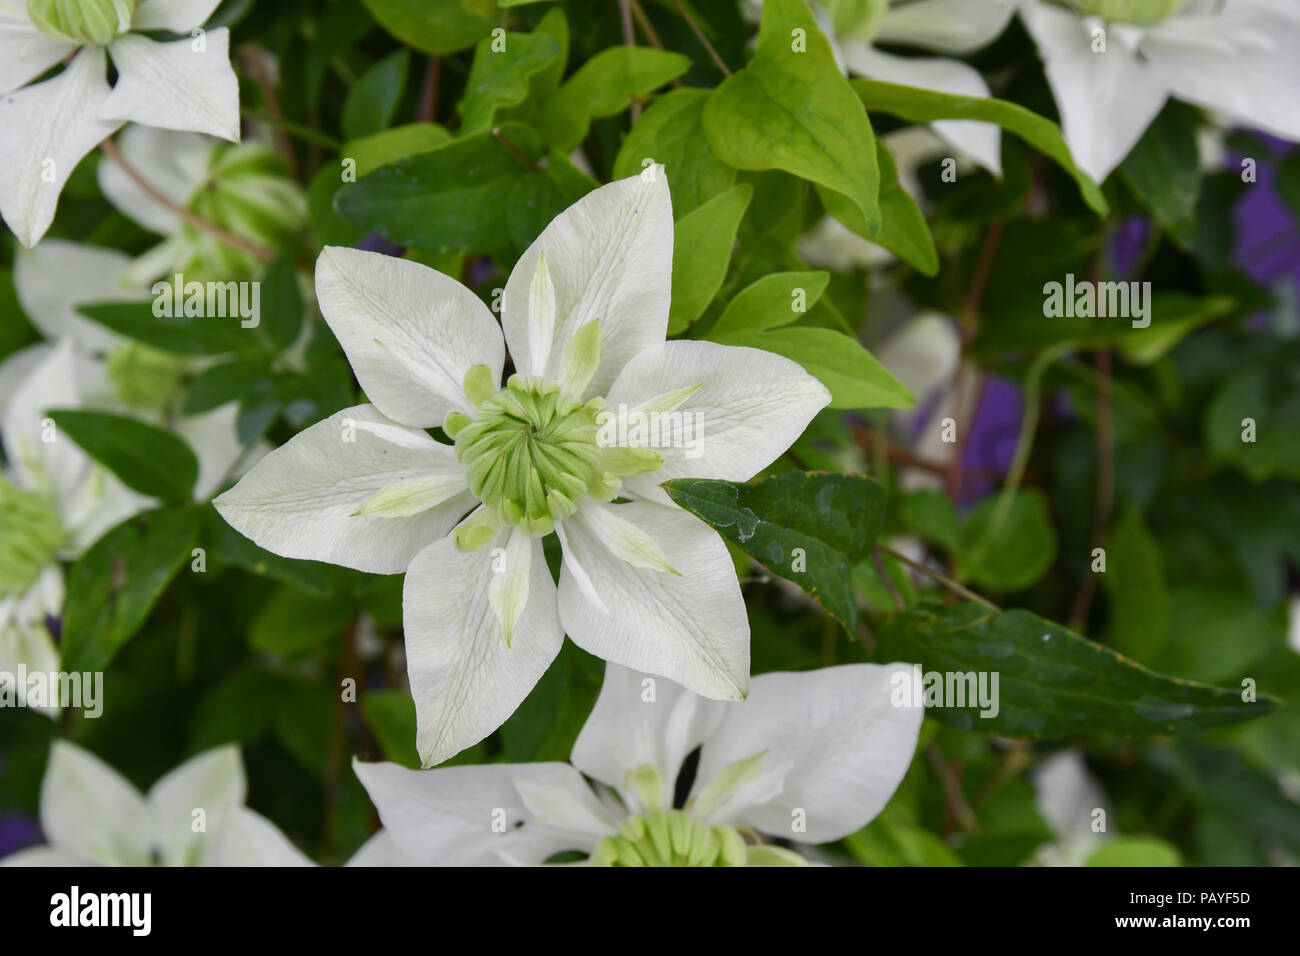 Clematis florida plena plant in flower Stock Photo